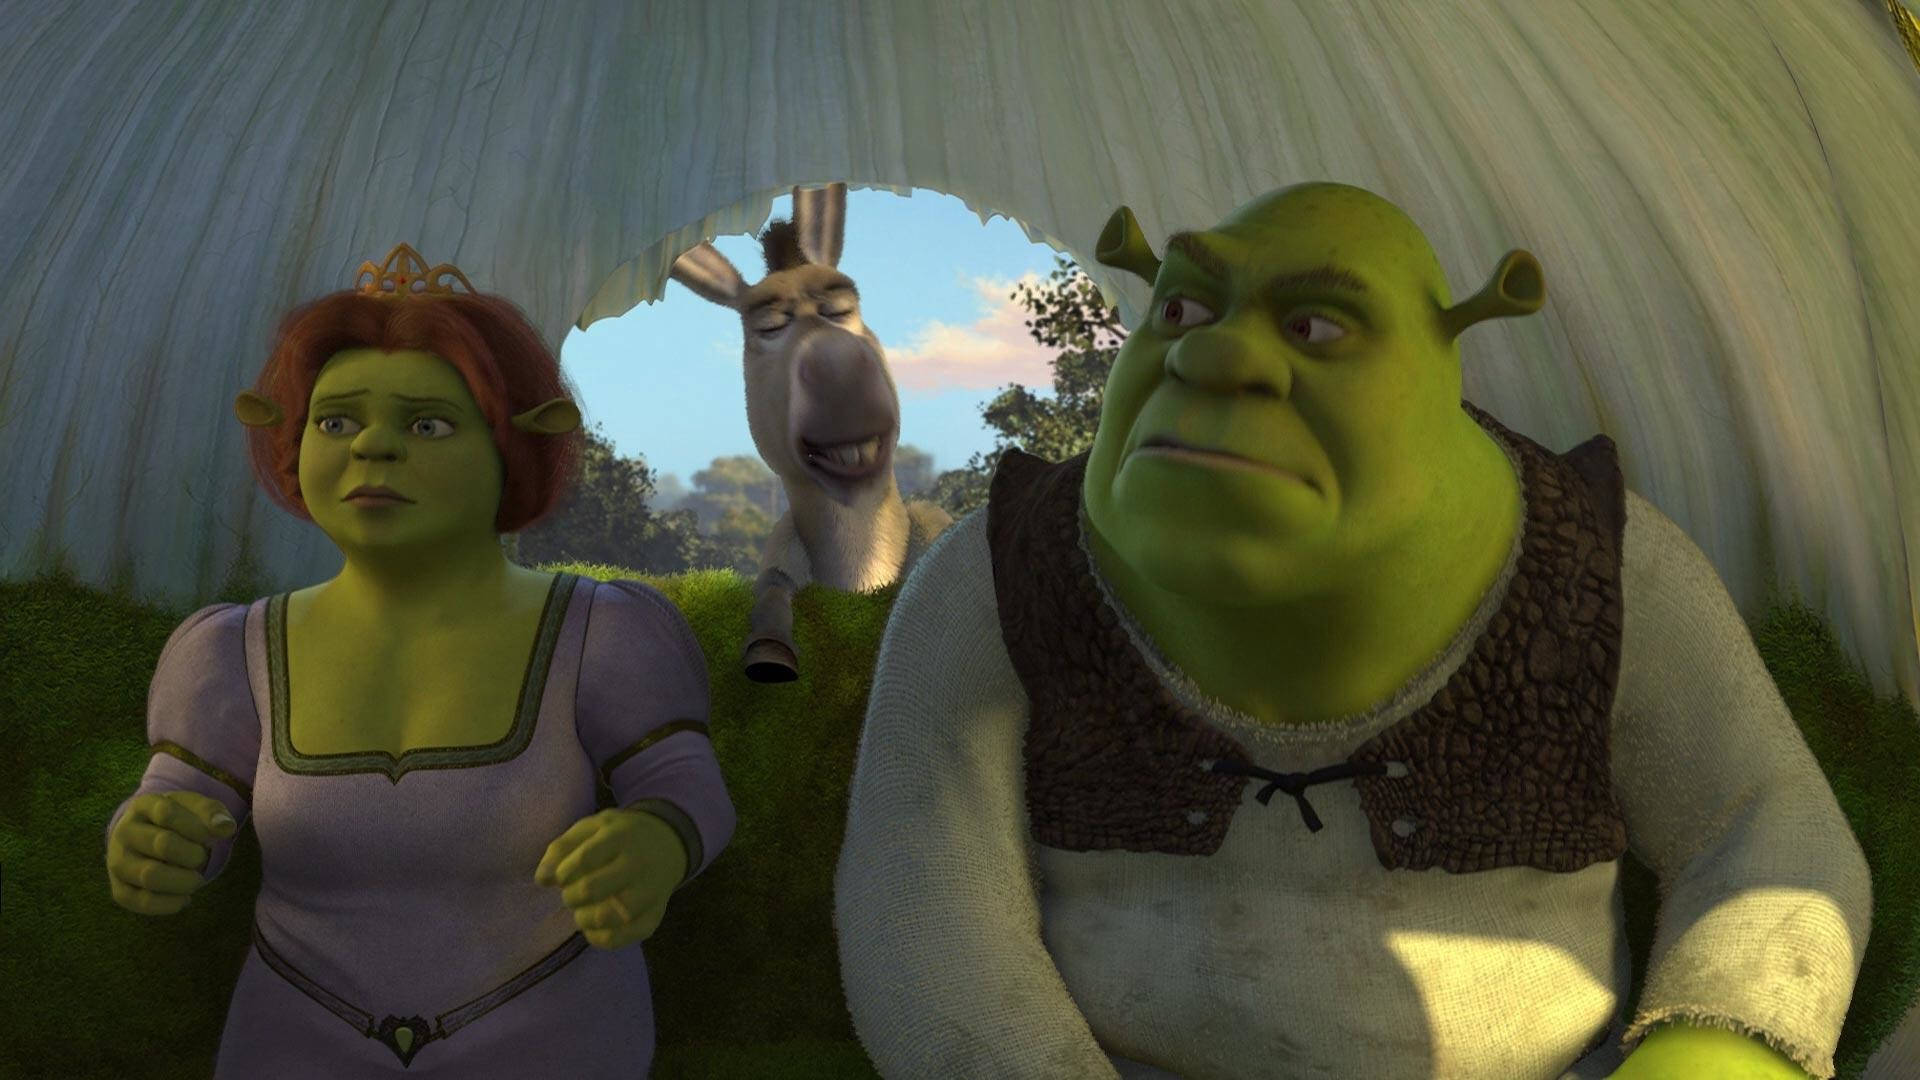 Download Fiona Donkey And Shrek 2 Cart Wallpaper